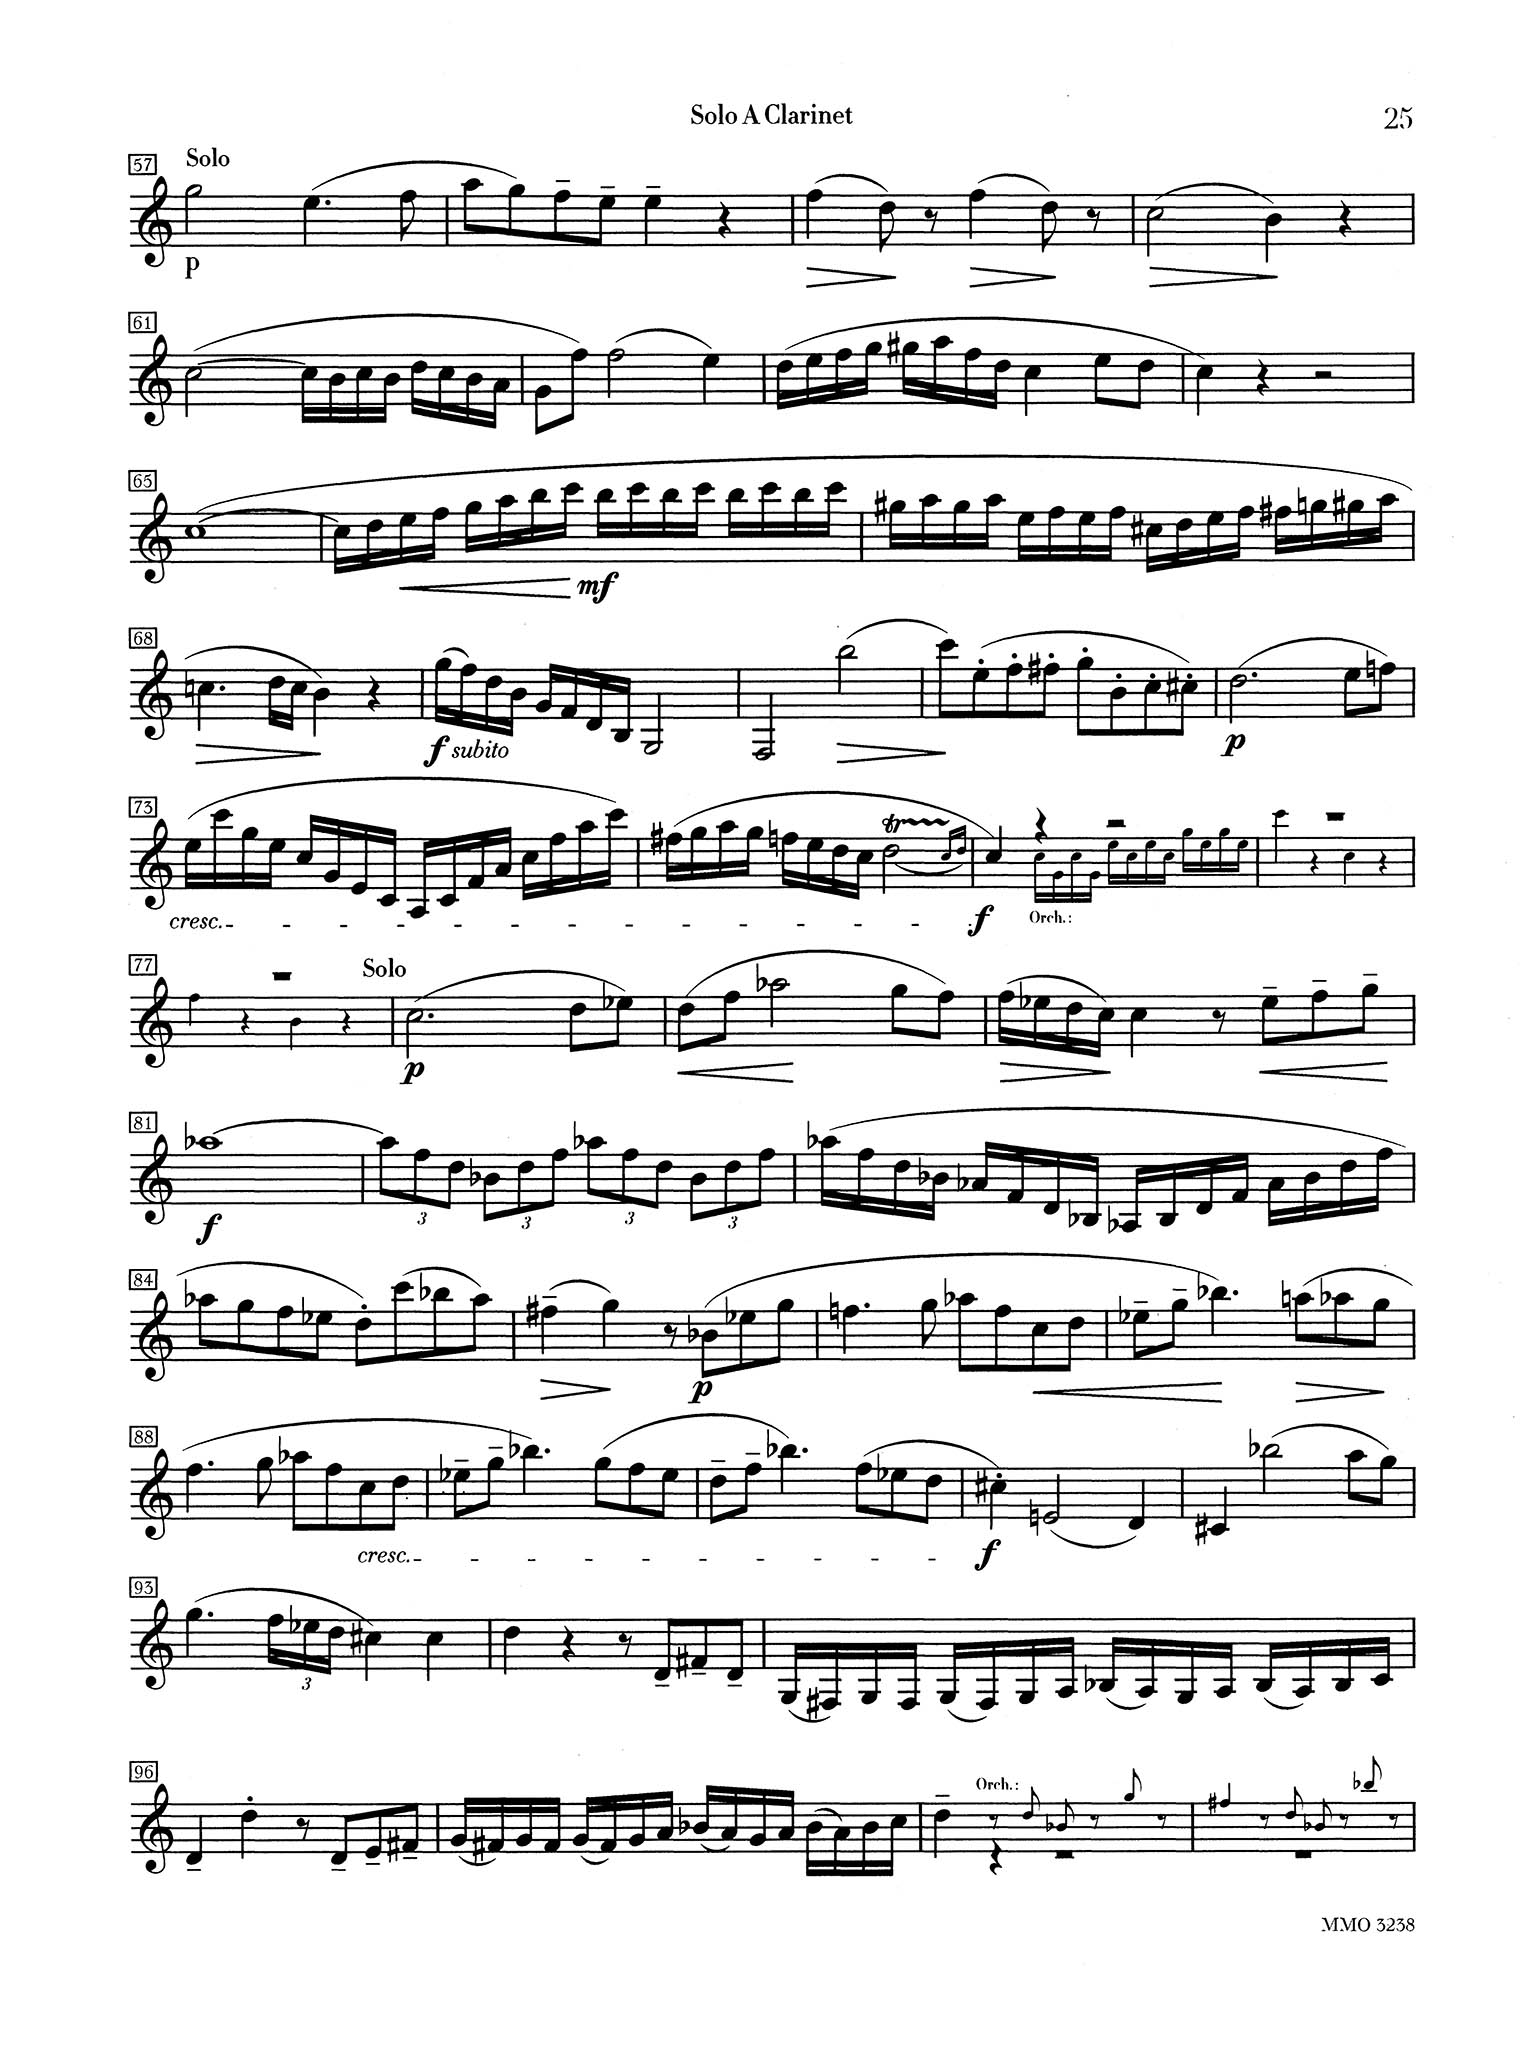 Clarinet Concerto in A Major, K. 622 A Clarinet part